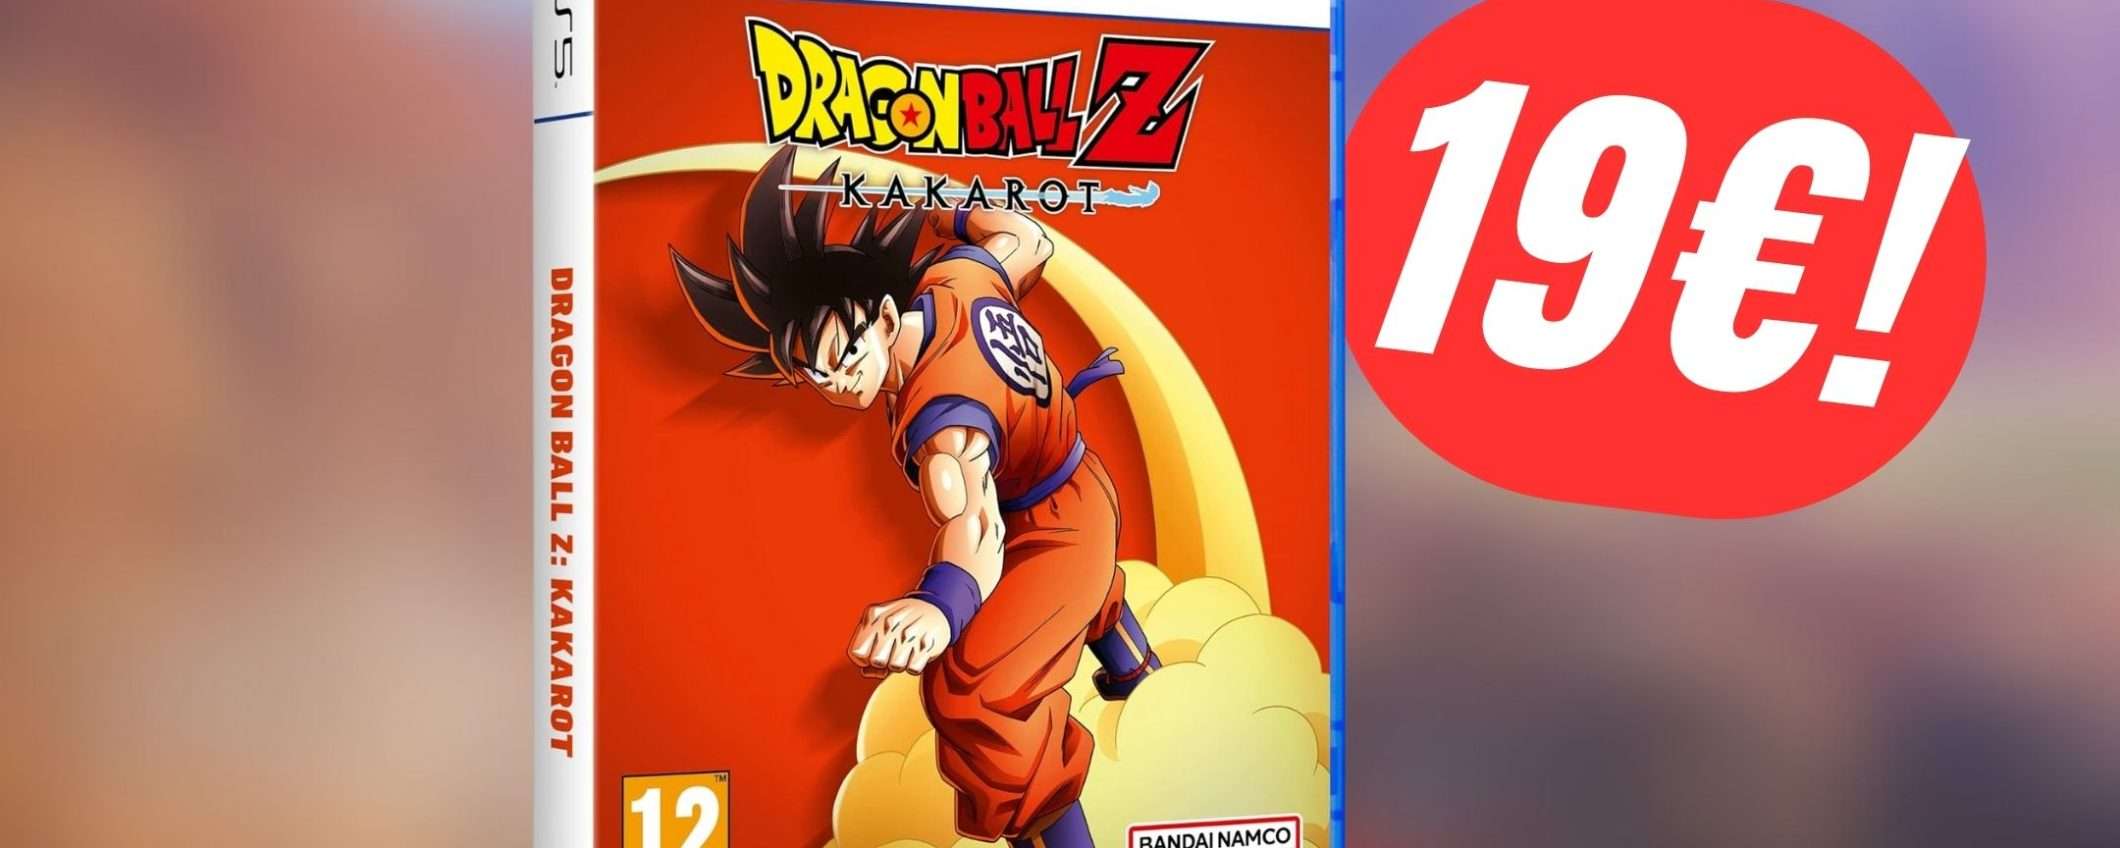 Dragon Ball Z: Kakarot CROLLA a soli 19€ per PS5!